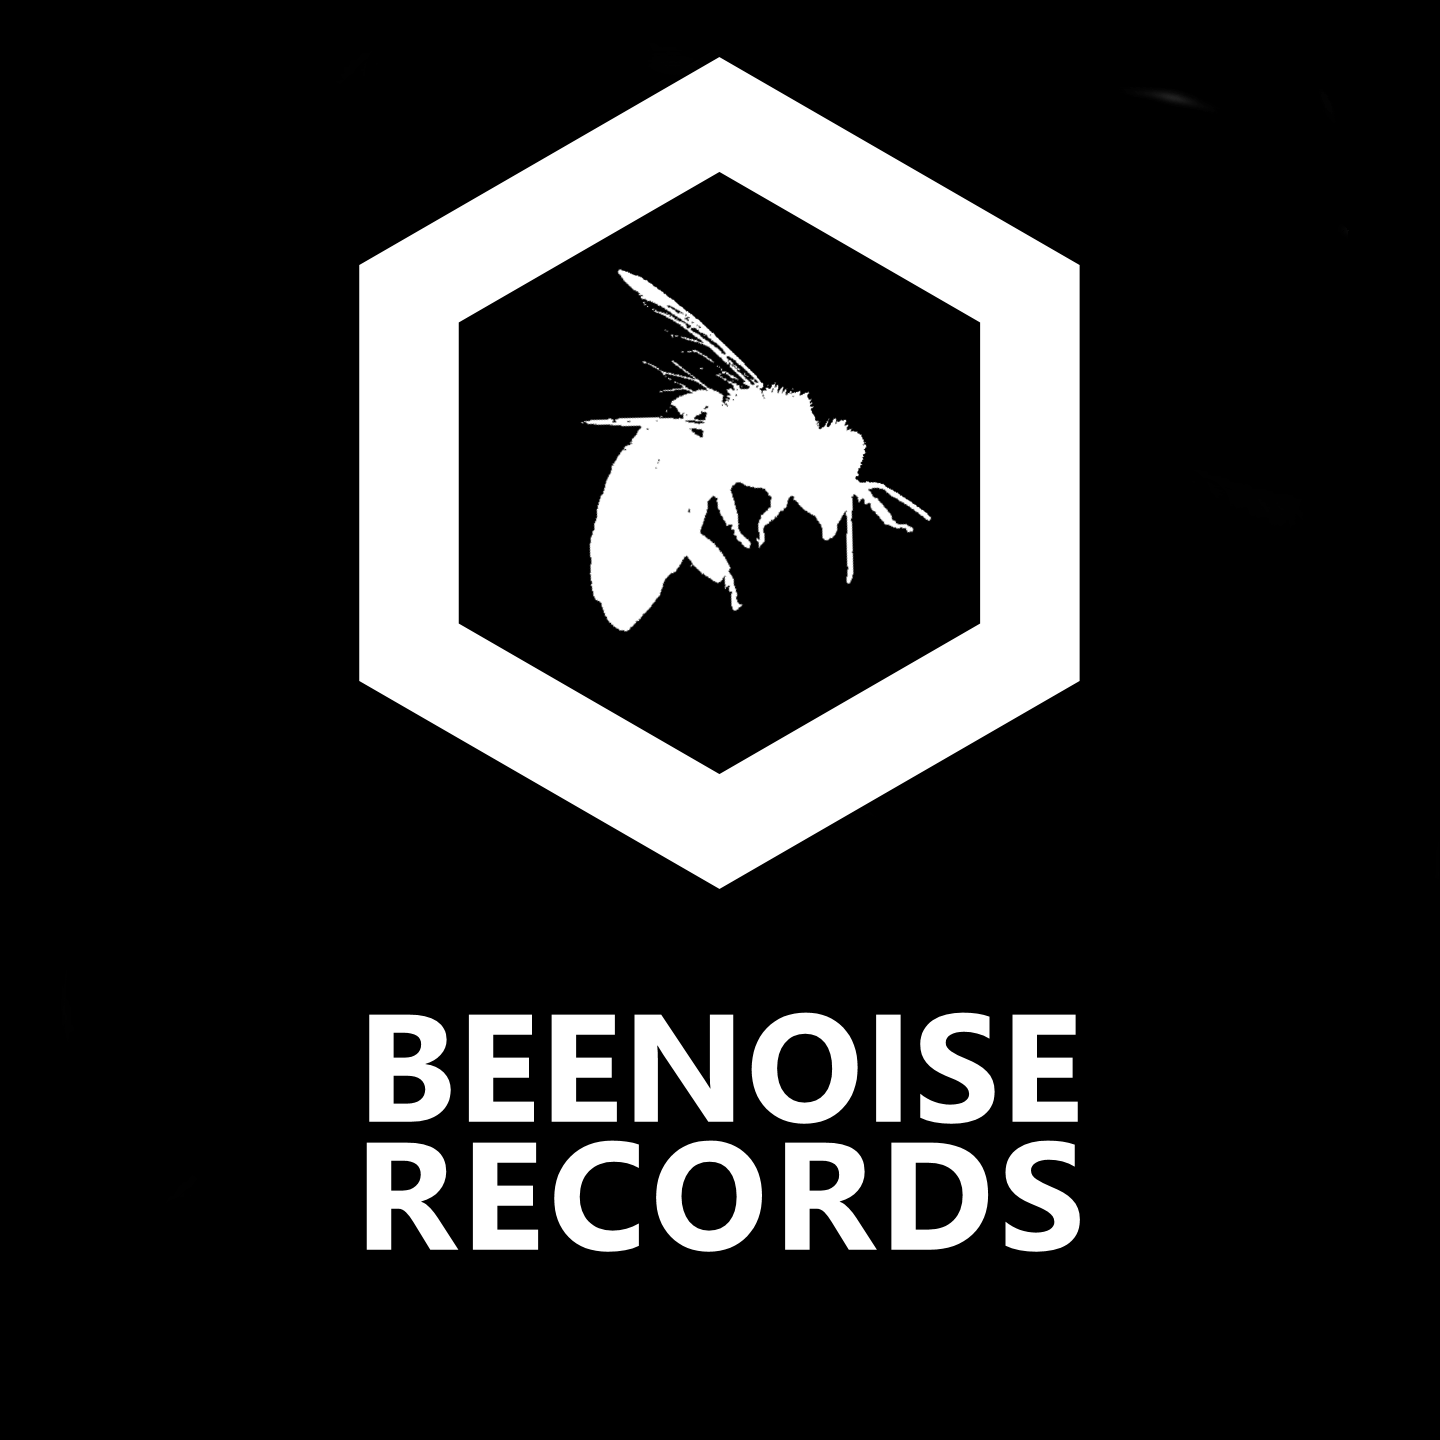 Beenoise Records